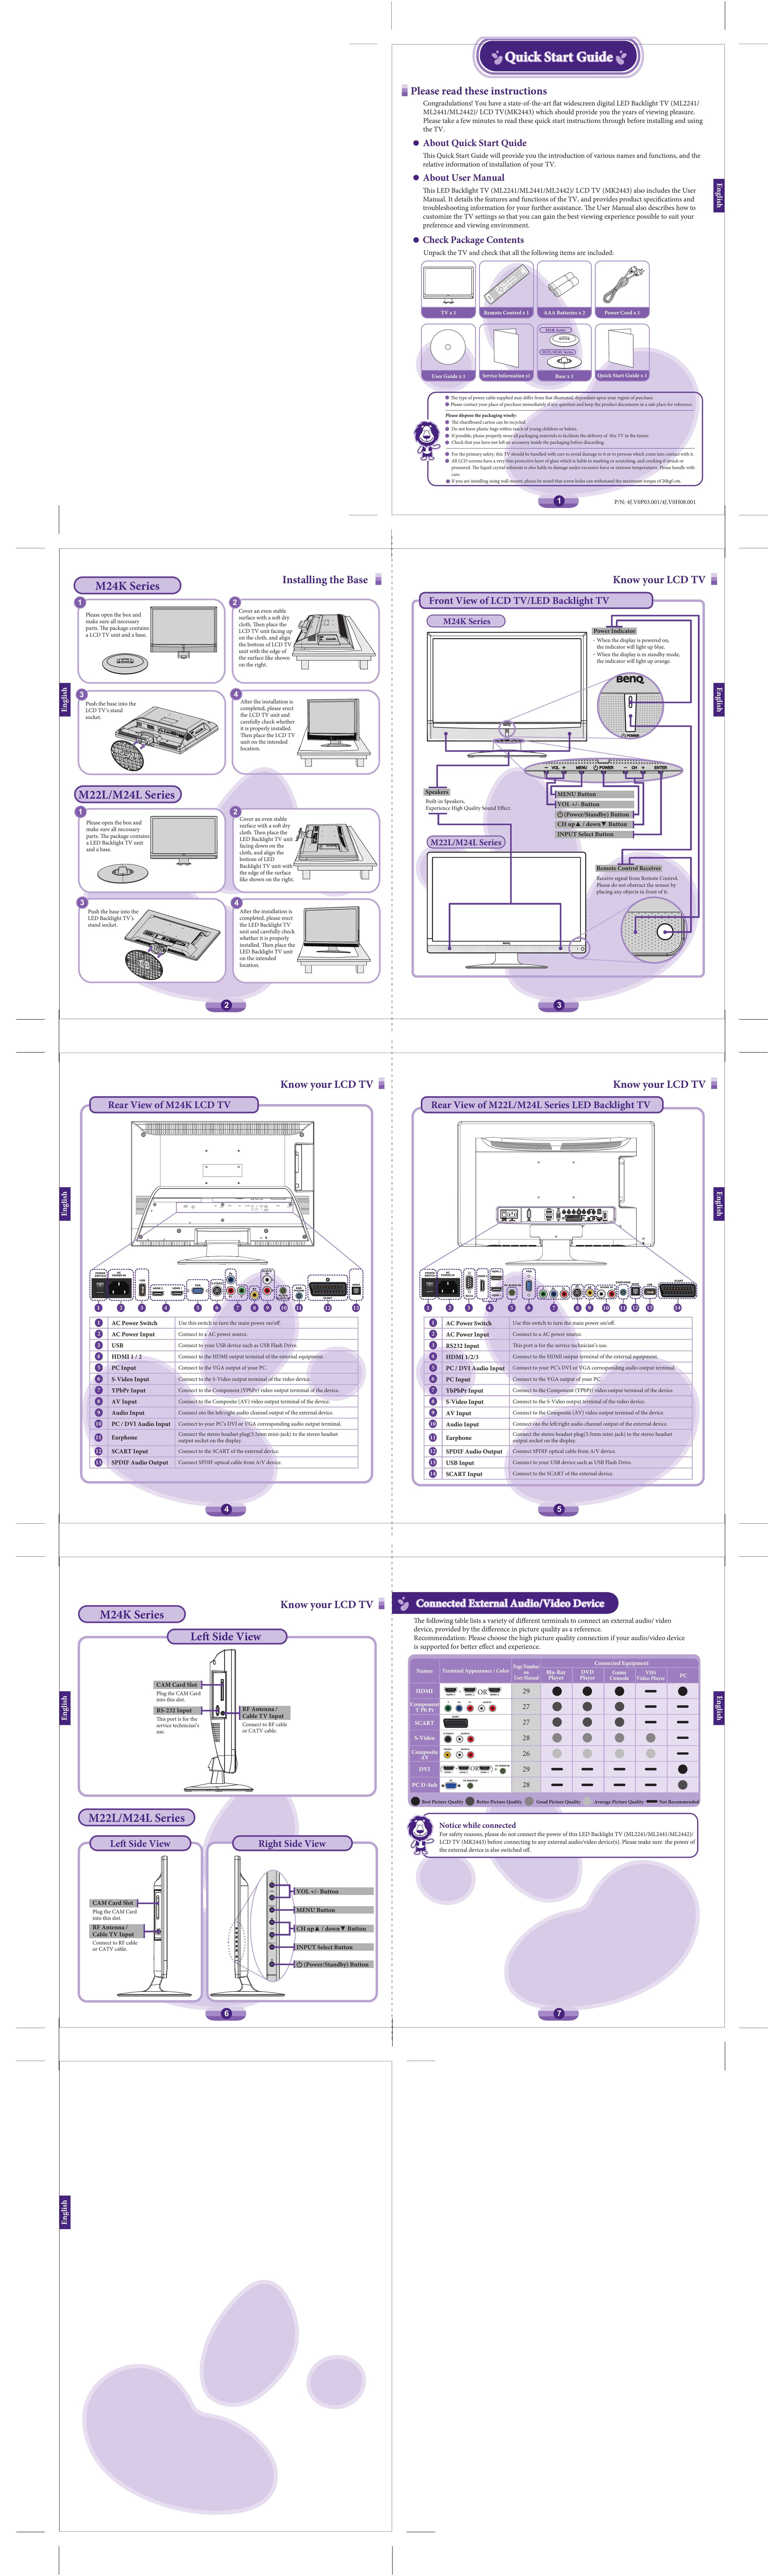 BenQ MK2443 Flat Panel Television User Manual